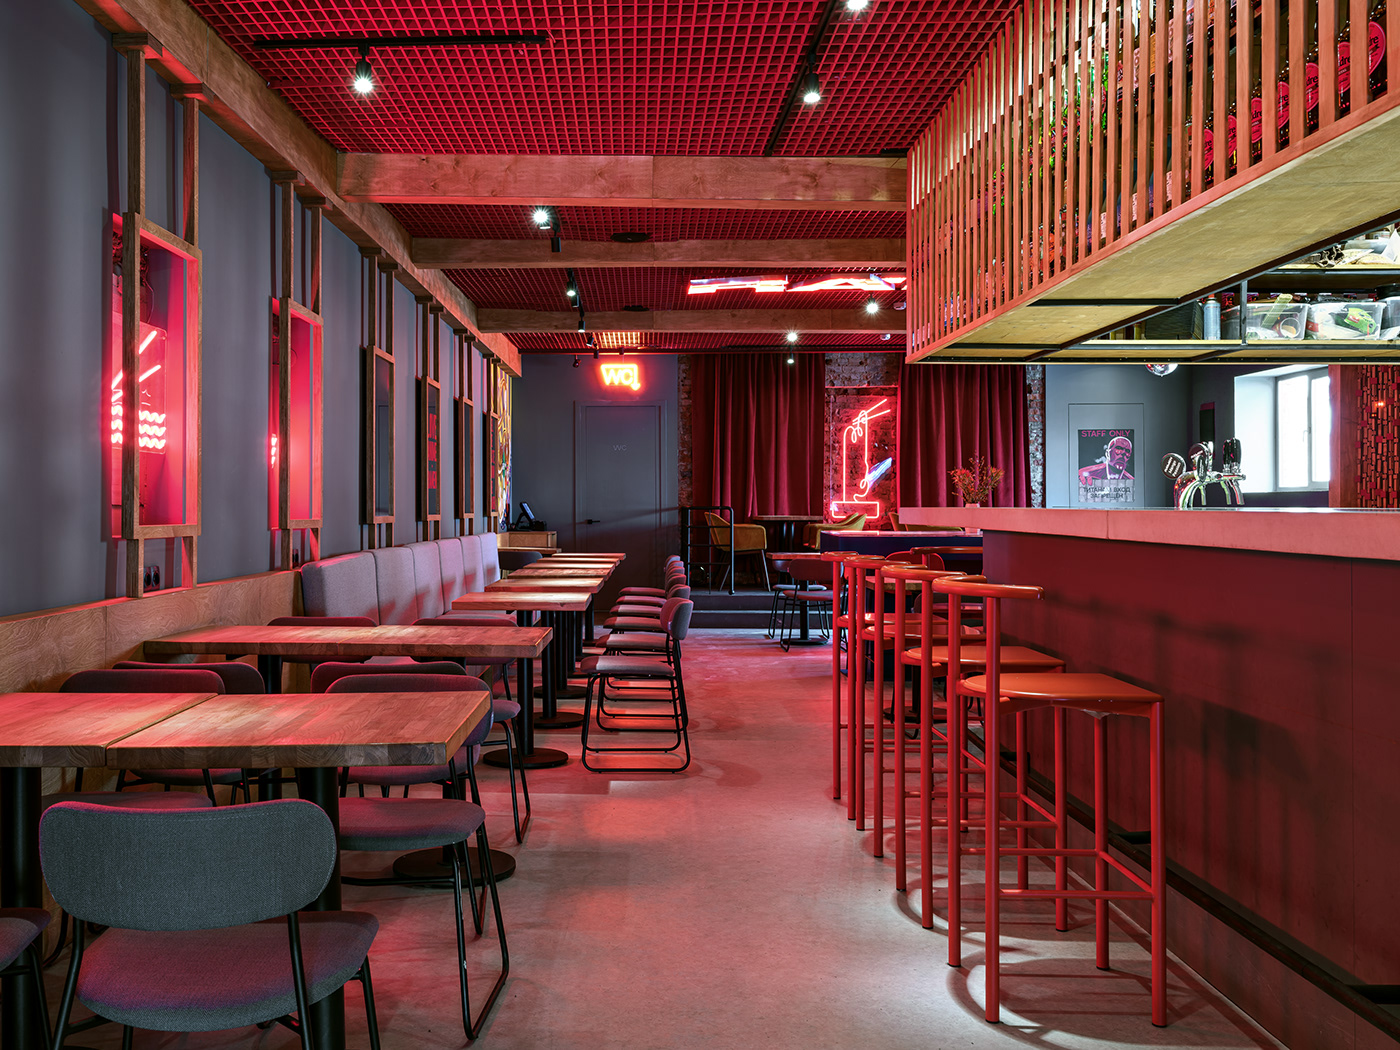 ramen bar noodles restaurant cafe Interior architecture red neon plywood